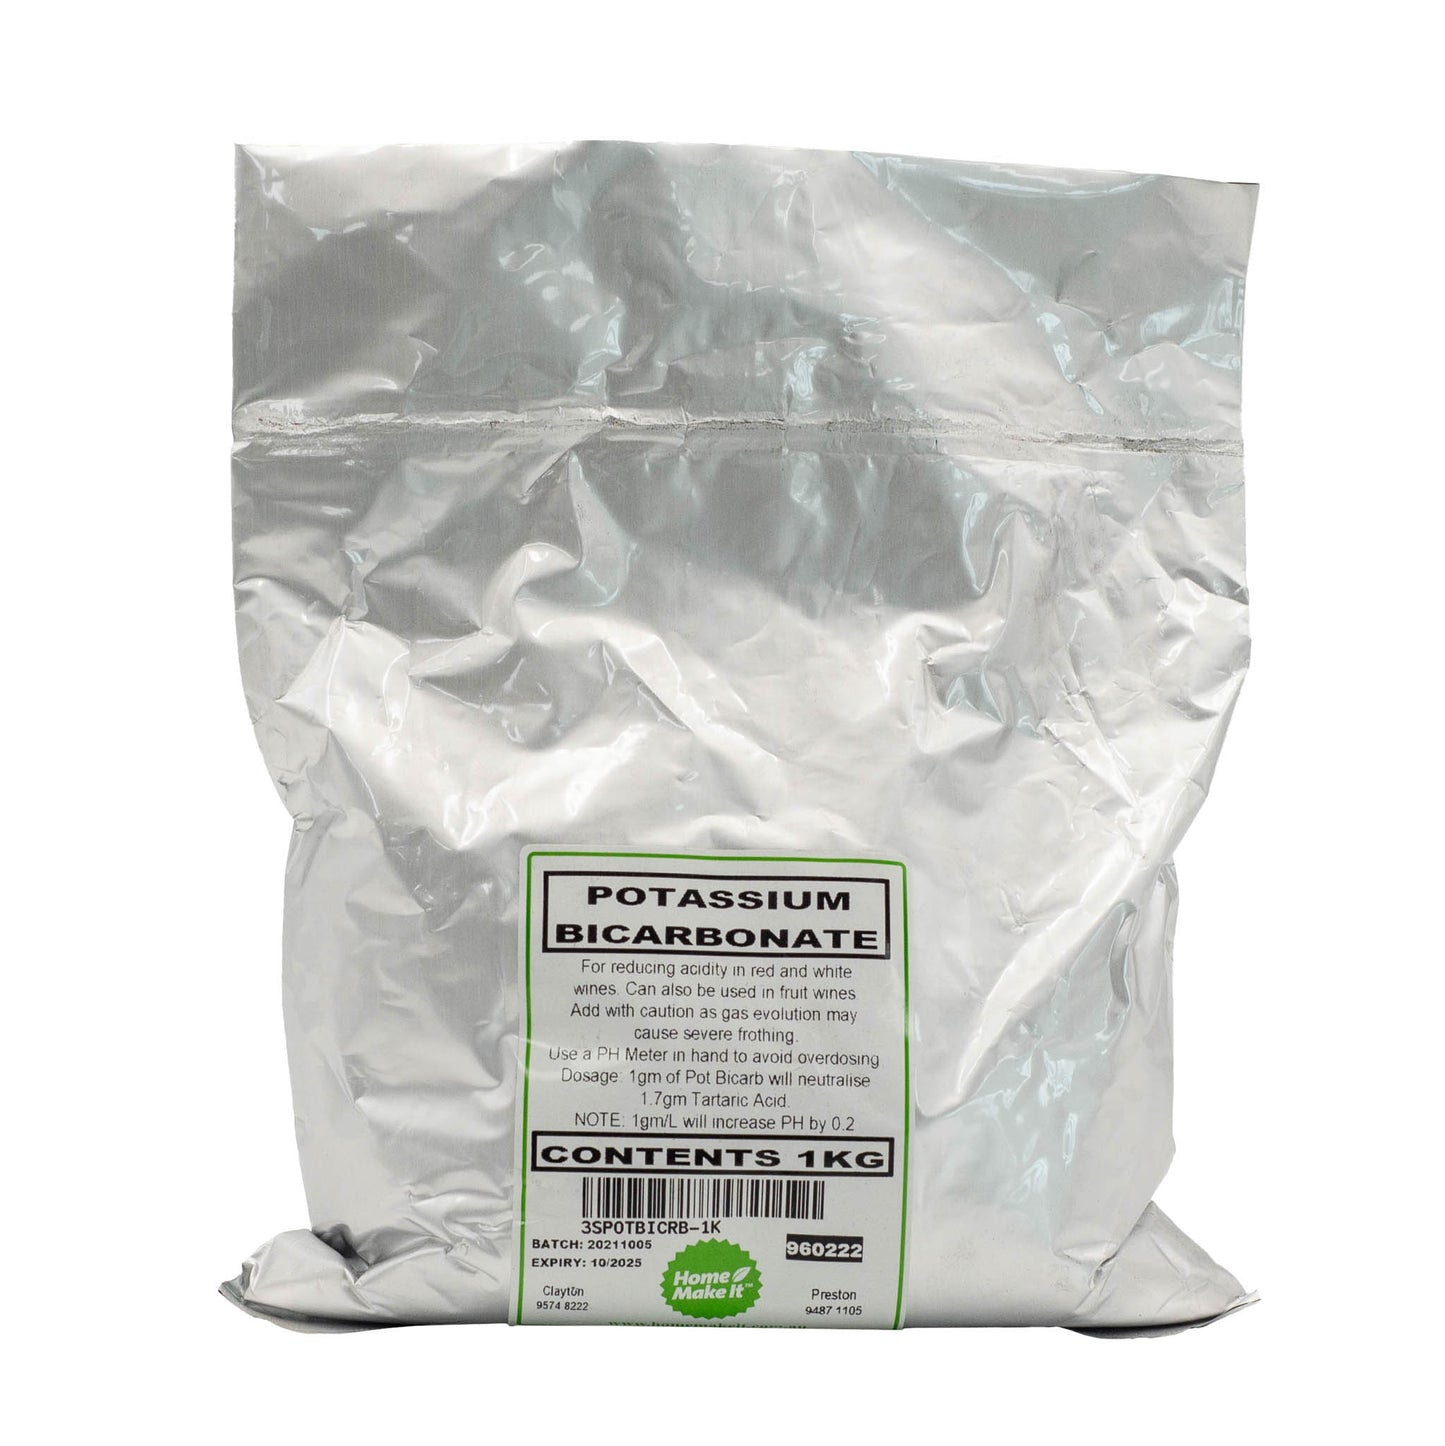 1 kg bag of Potassium Bicarbonate.